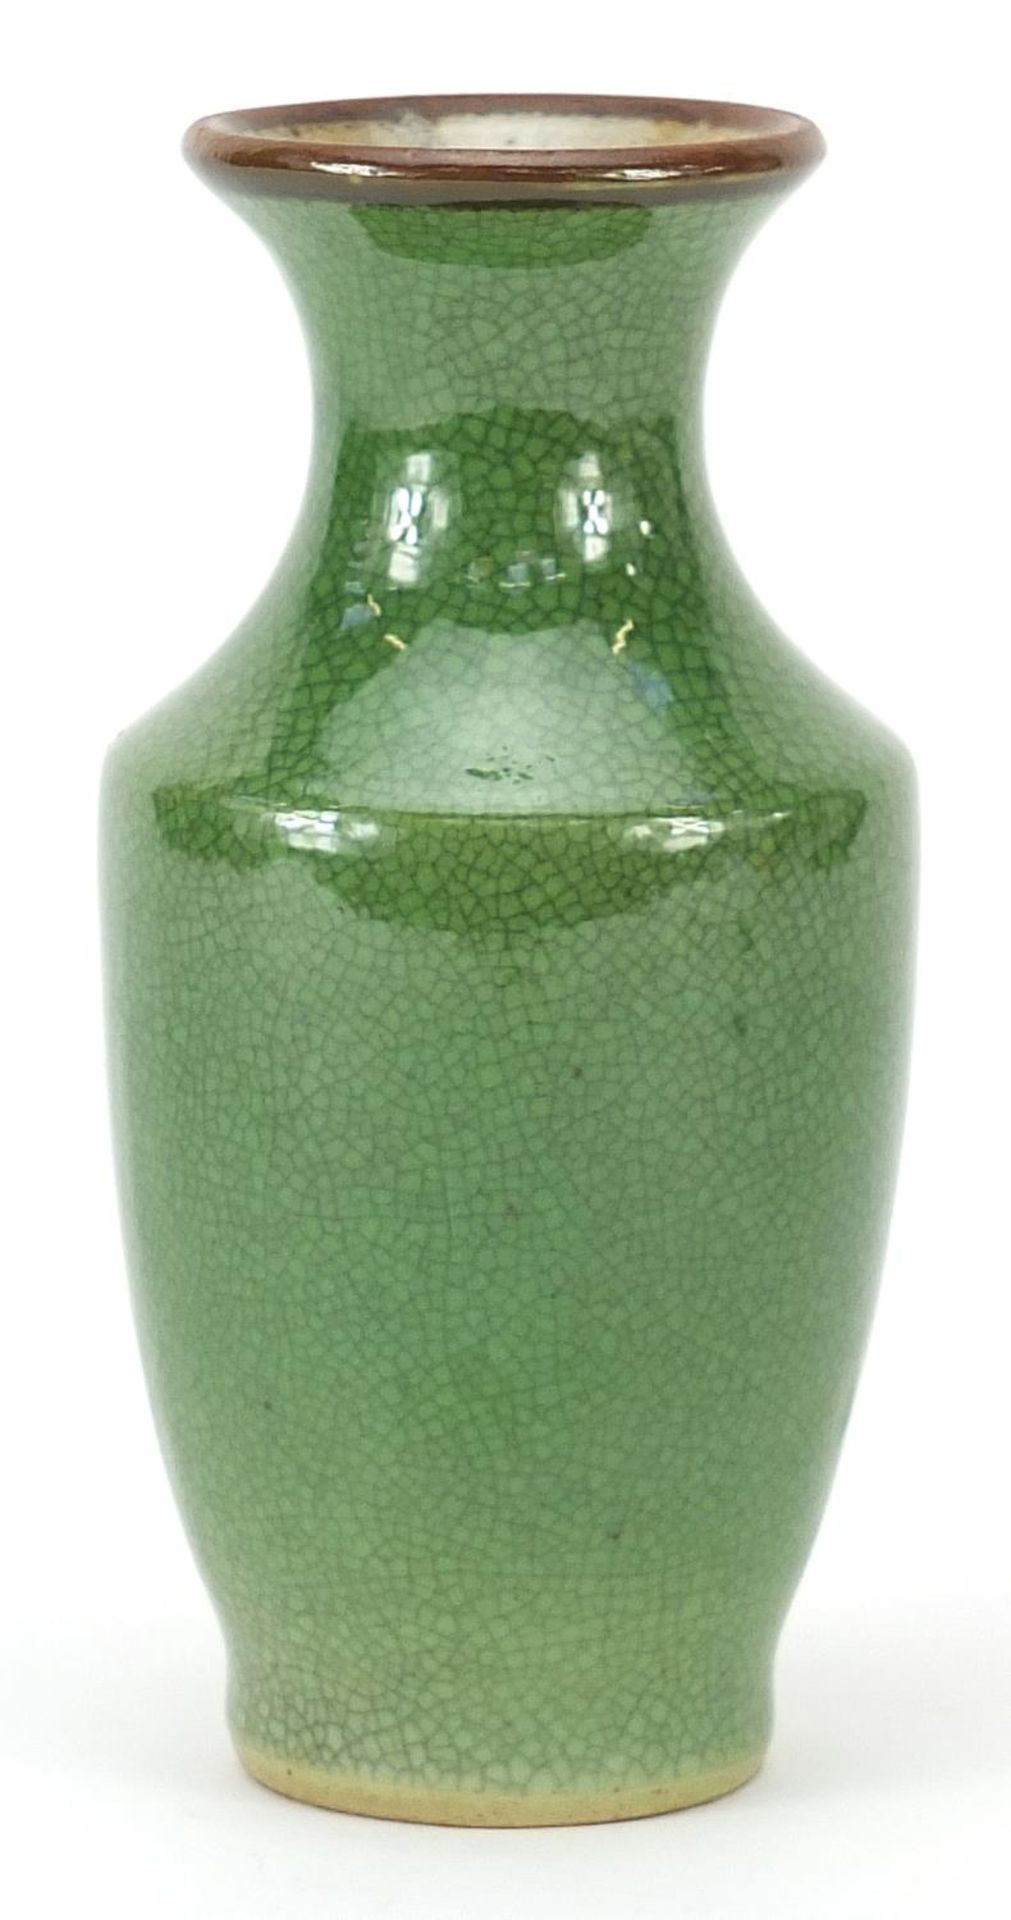 Chinese porcelain crackle glazed vase having a green monochrome glaze, 15cm high